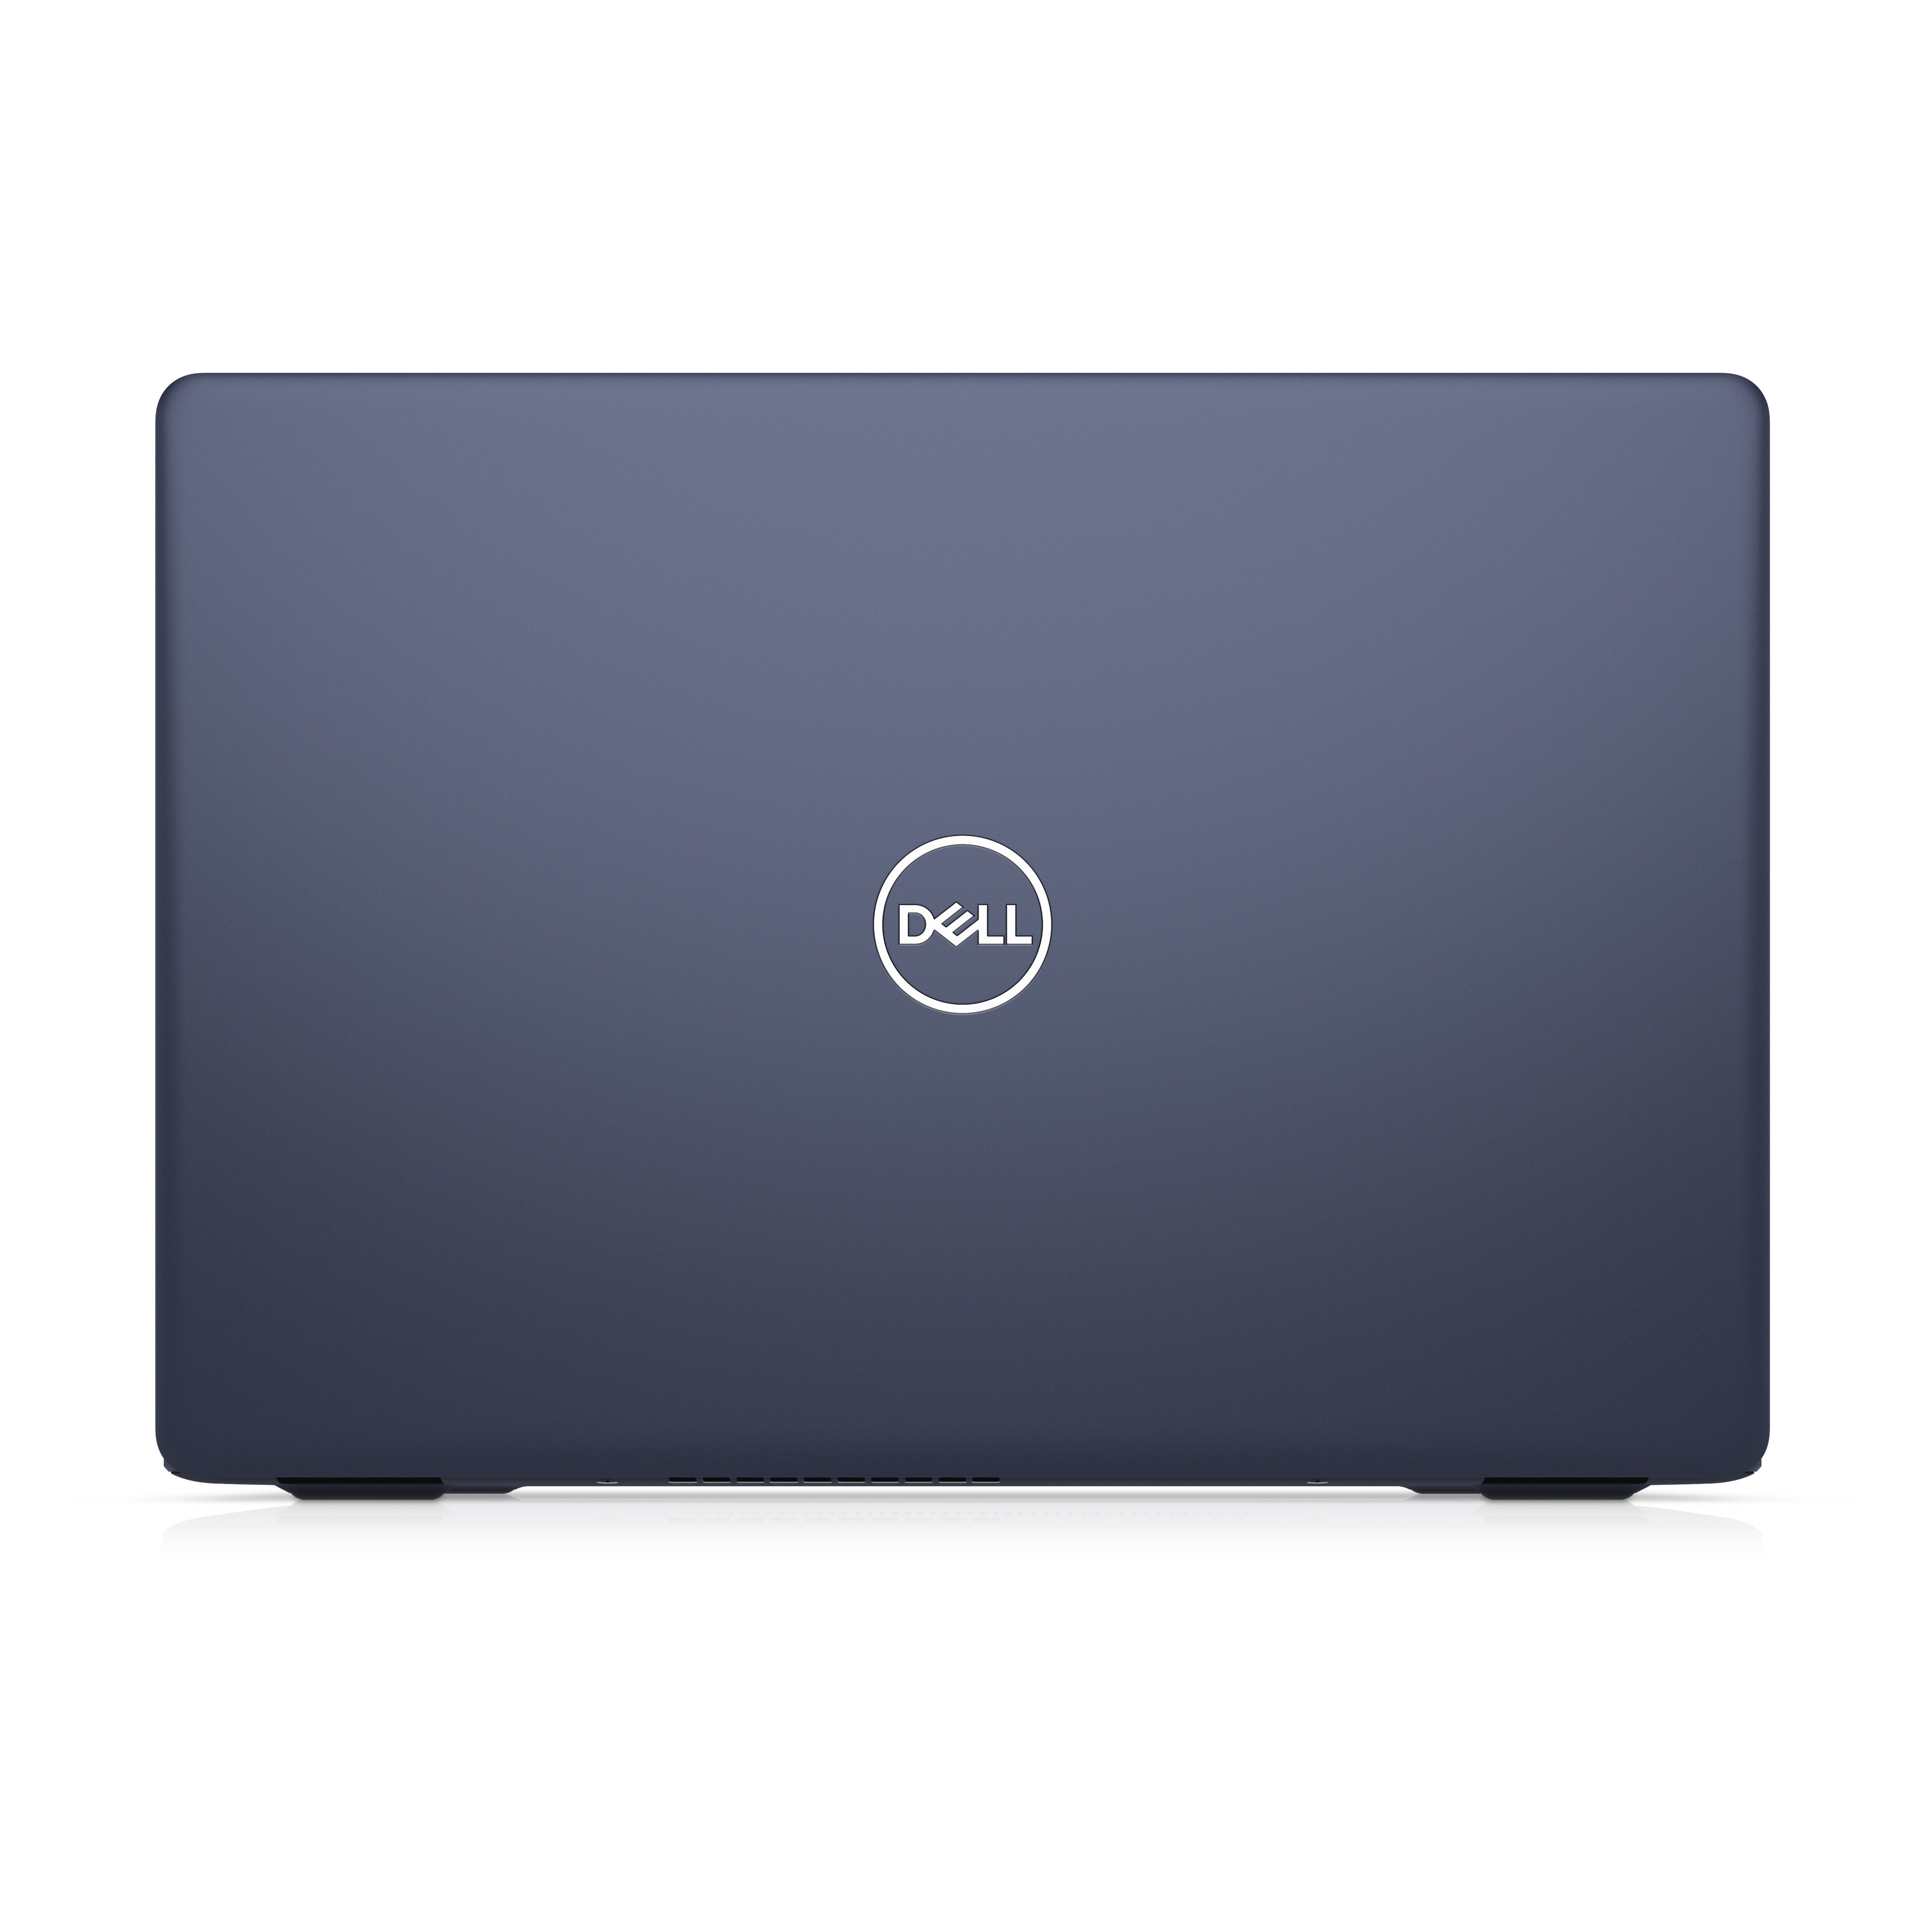 Dell Inspiron 15 5000 (5593) Laptop | Dell India